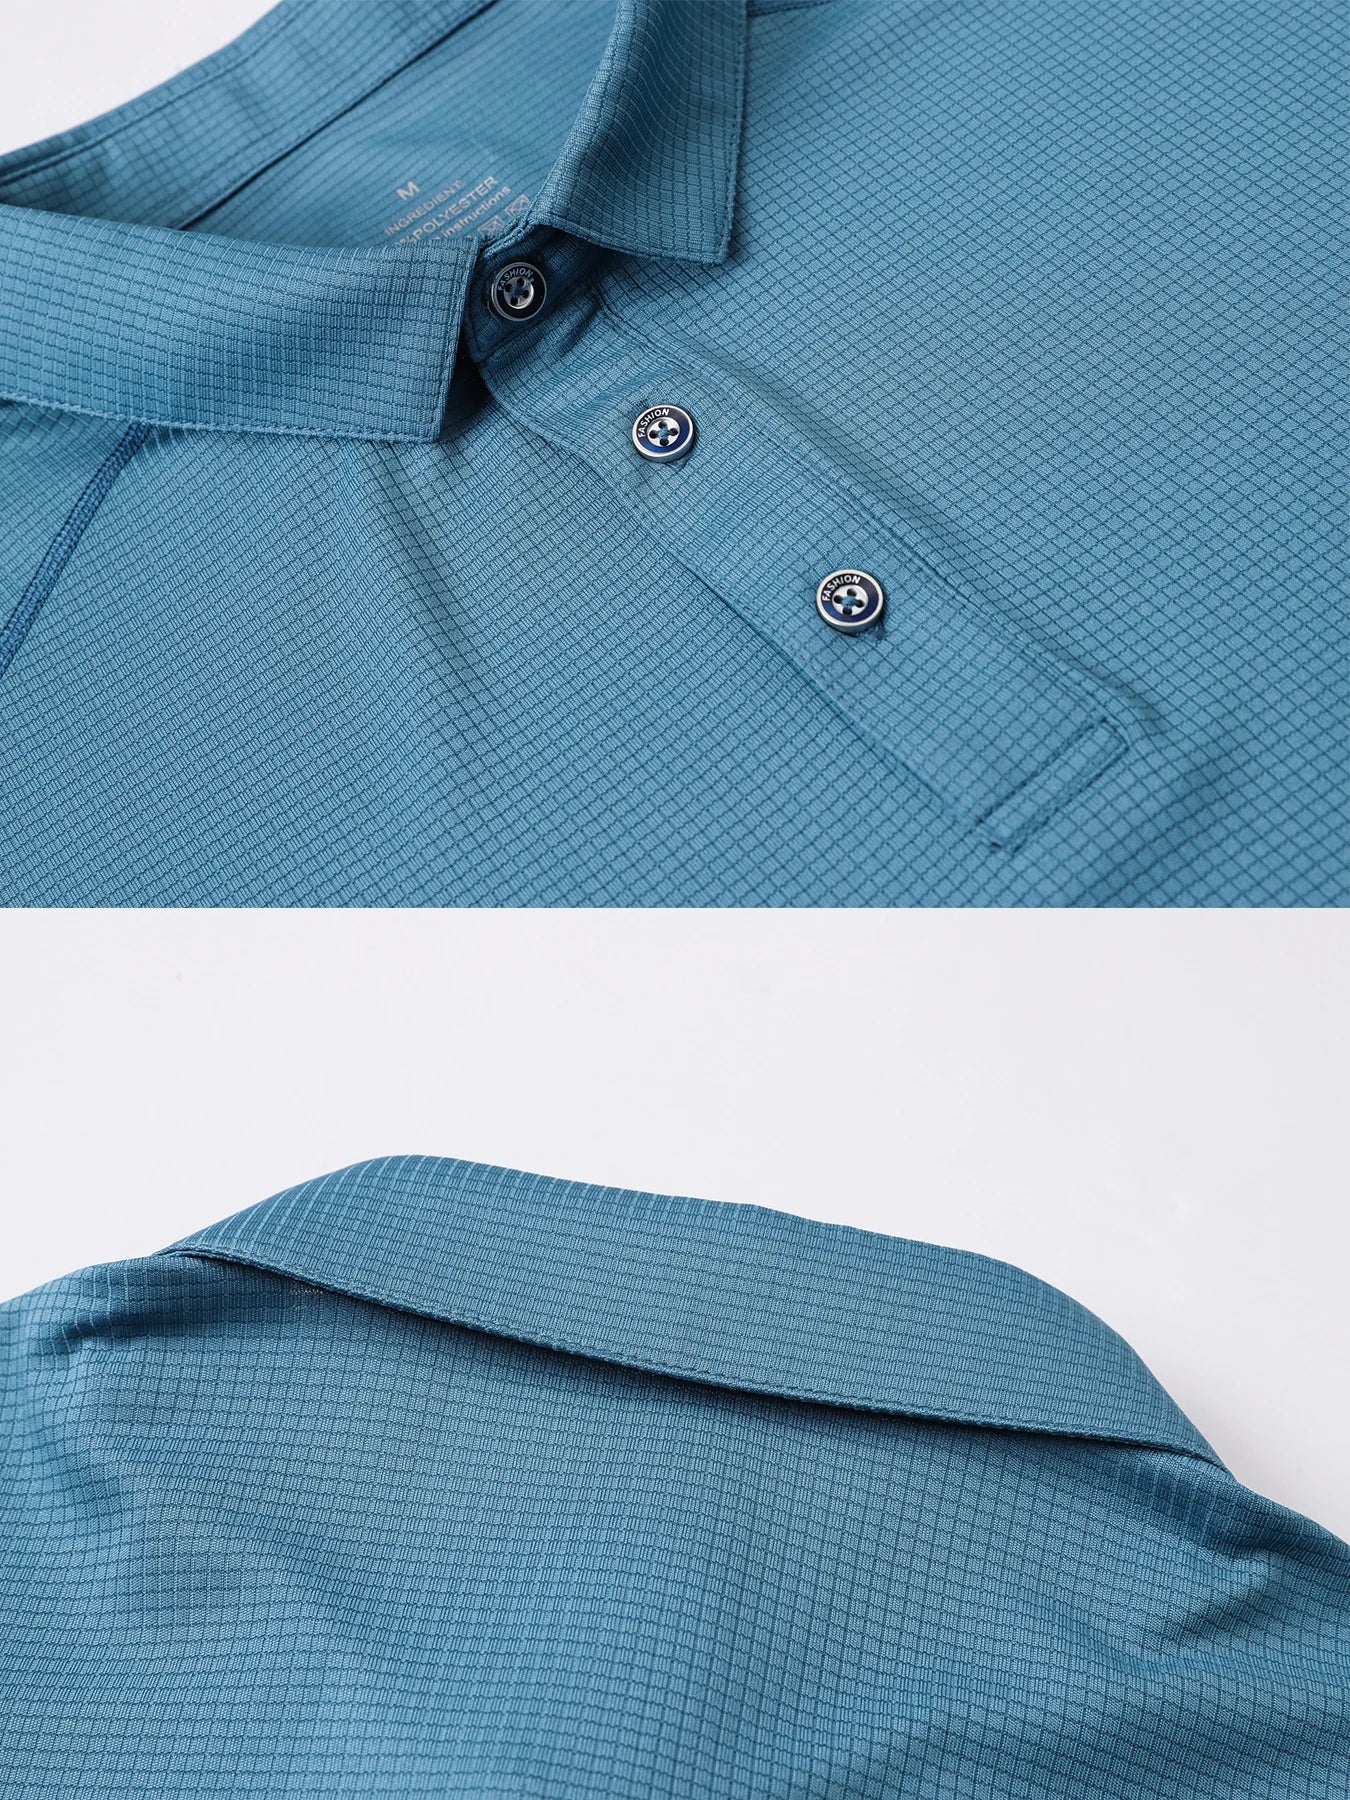 Breathable Quick Dry Short Sleeve Men's Golf Shirt